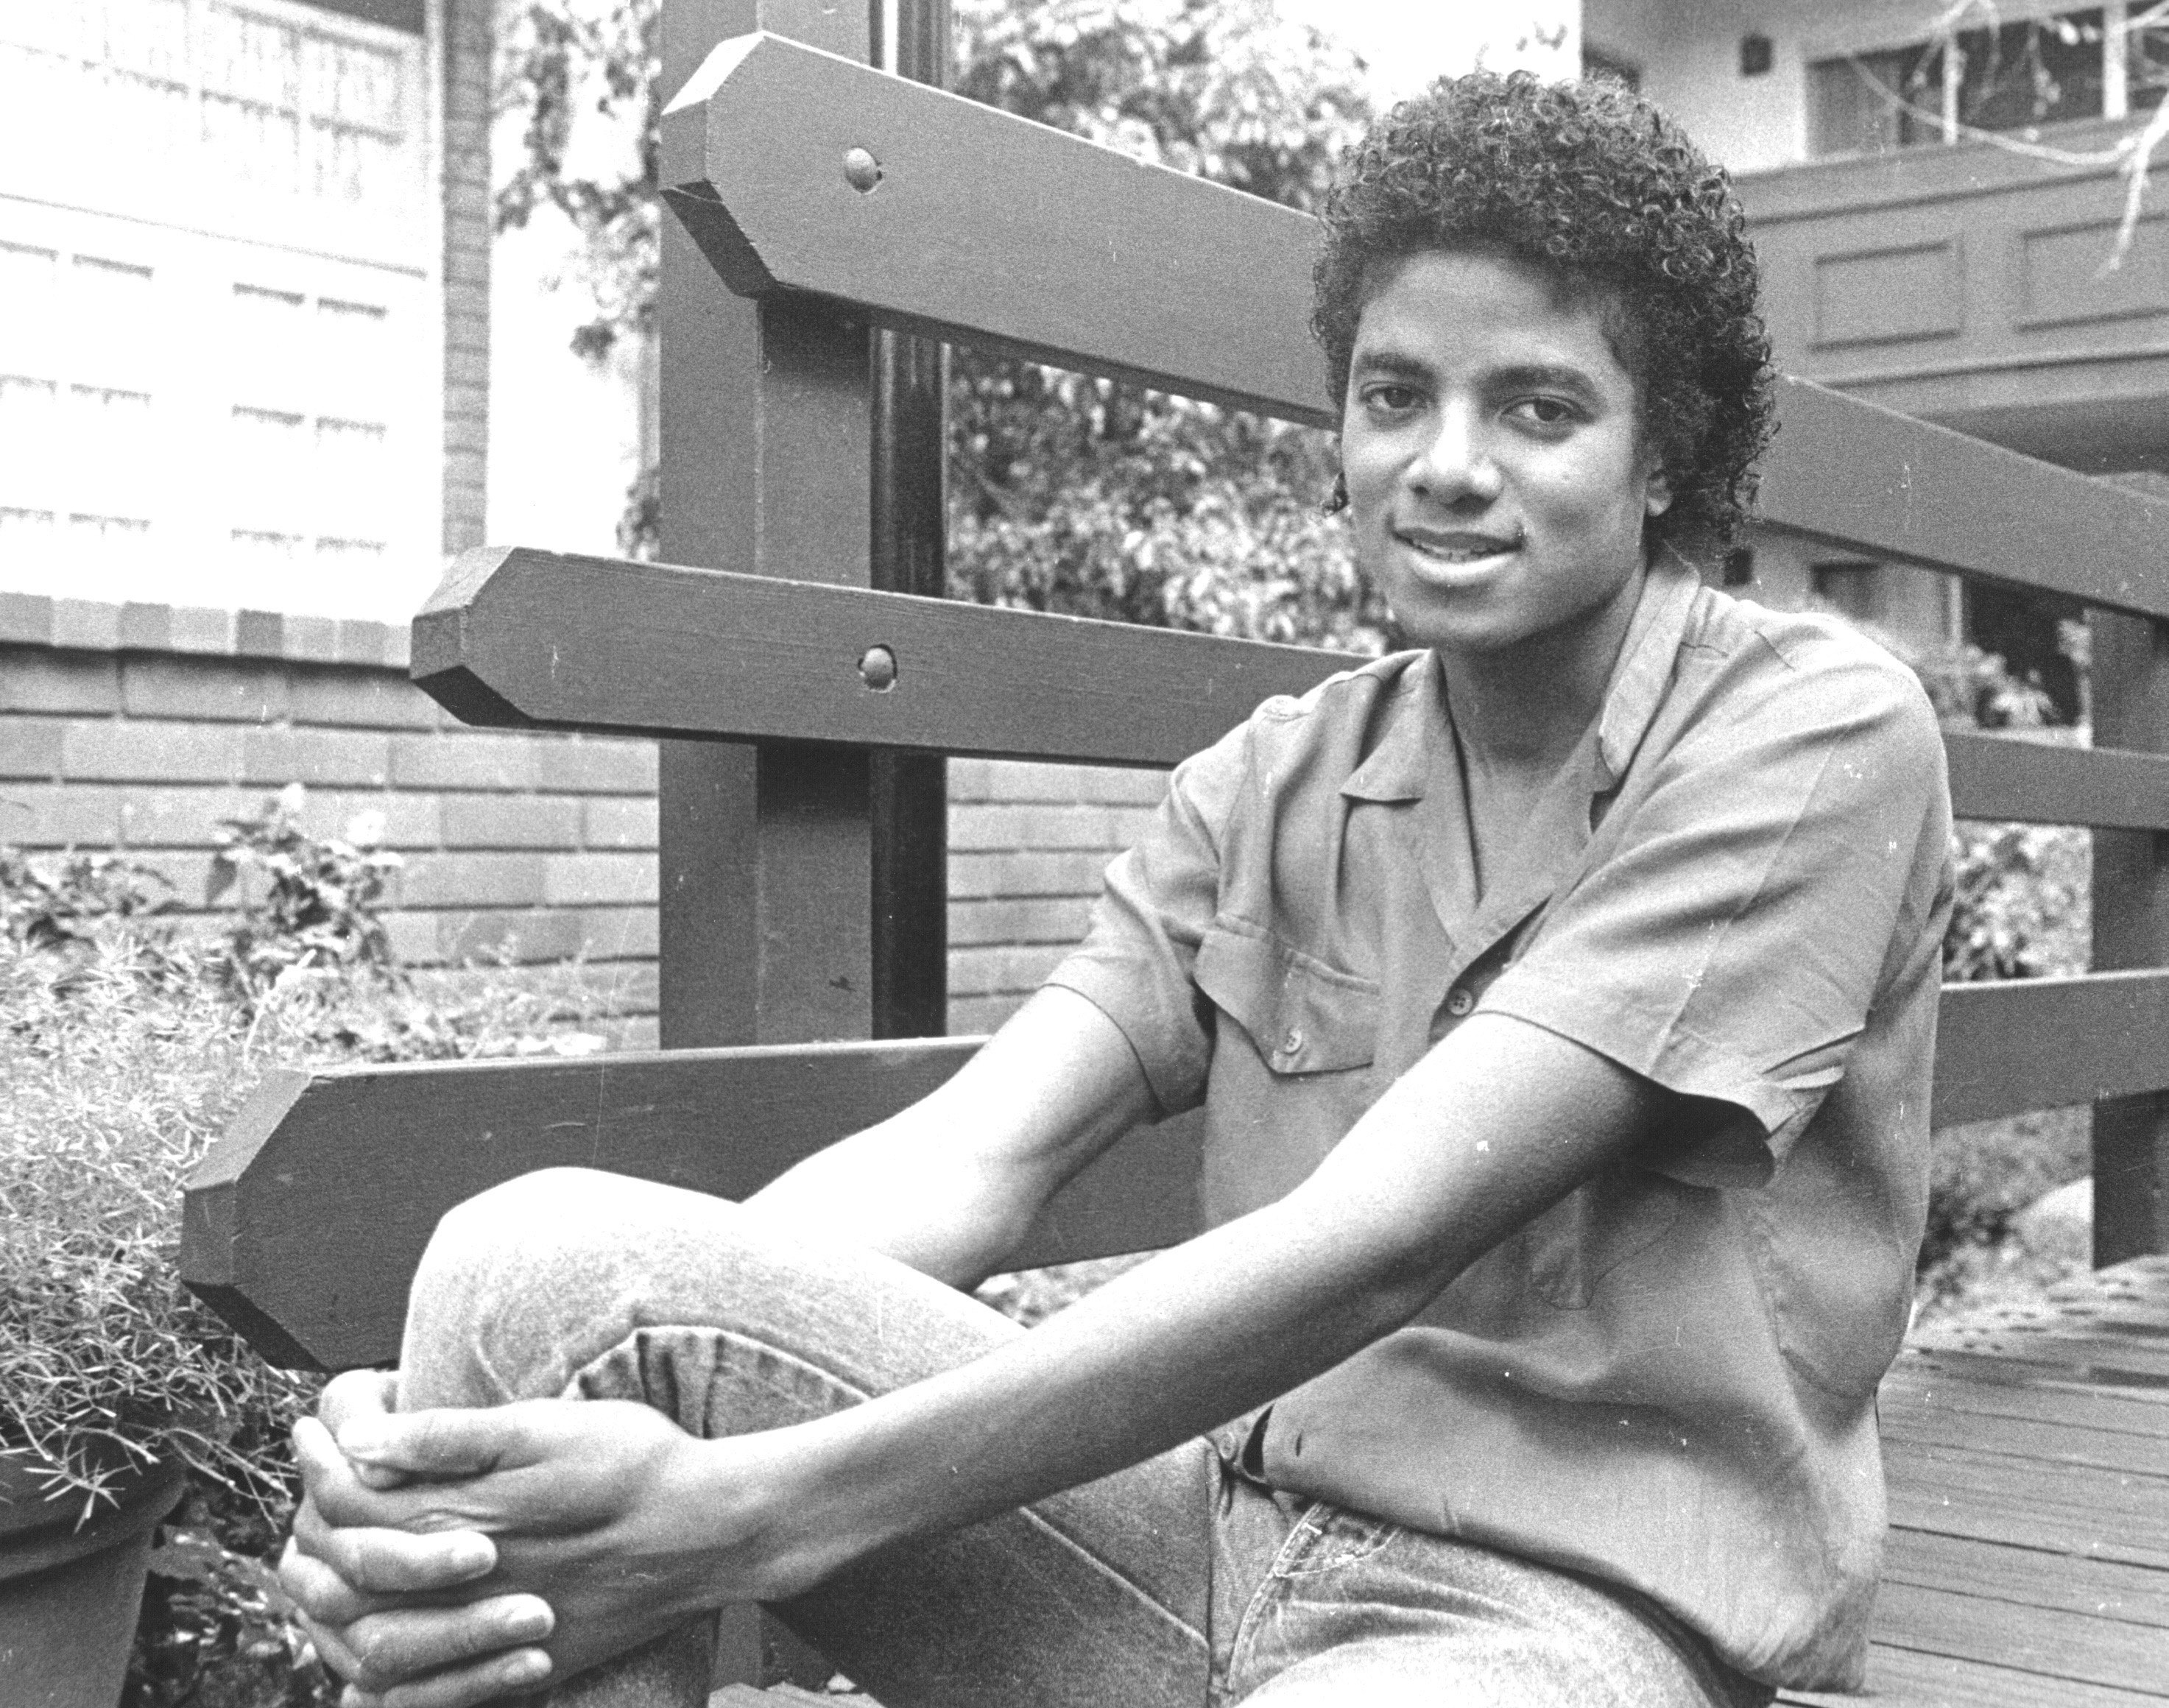 Michael Jackson sitting